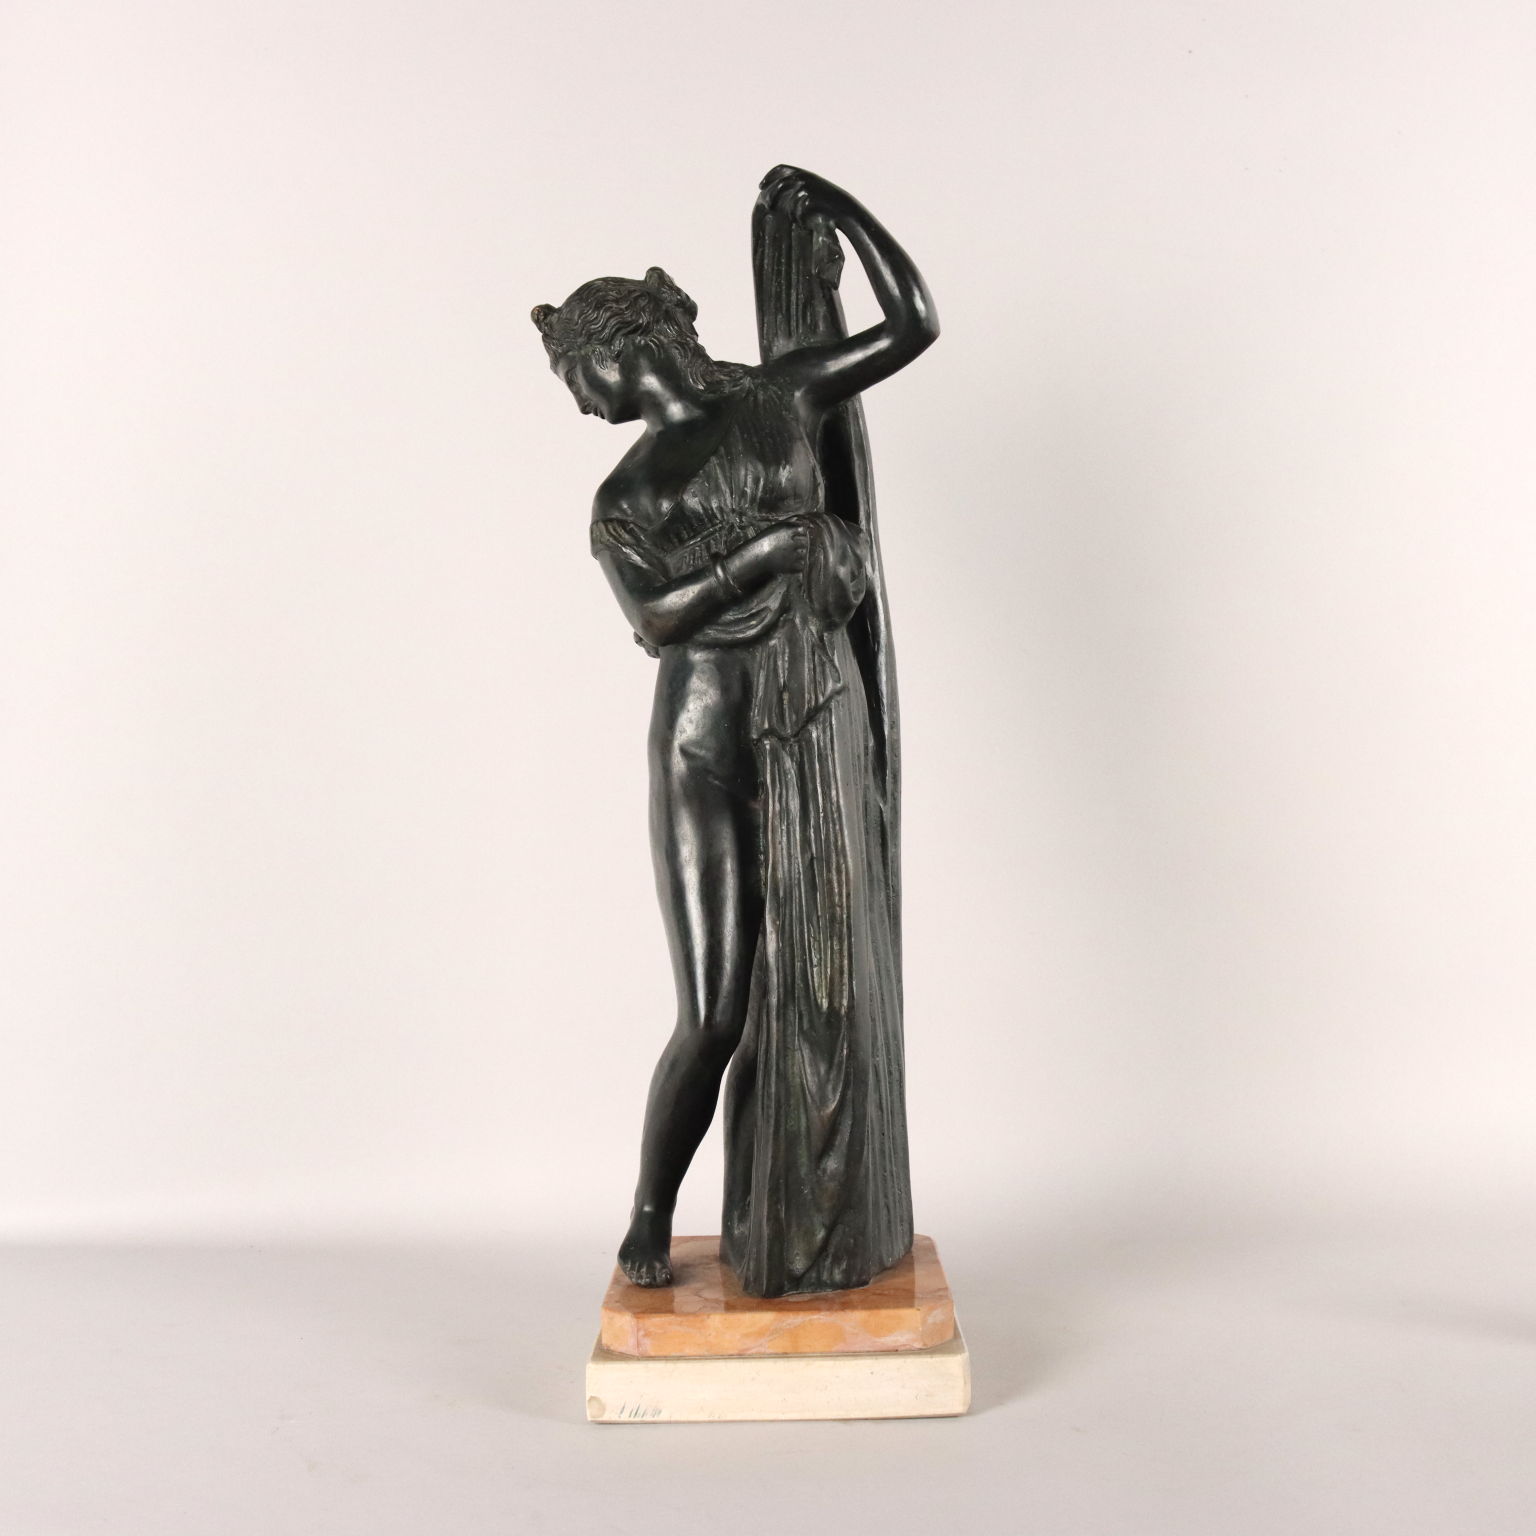 Escultura Vênus Calipgia 180cm - EMP444. Compre já! - quintadellarte